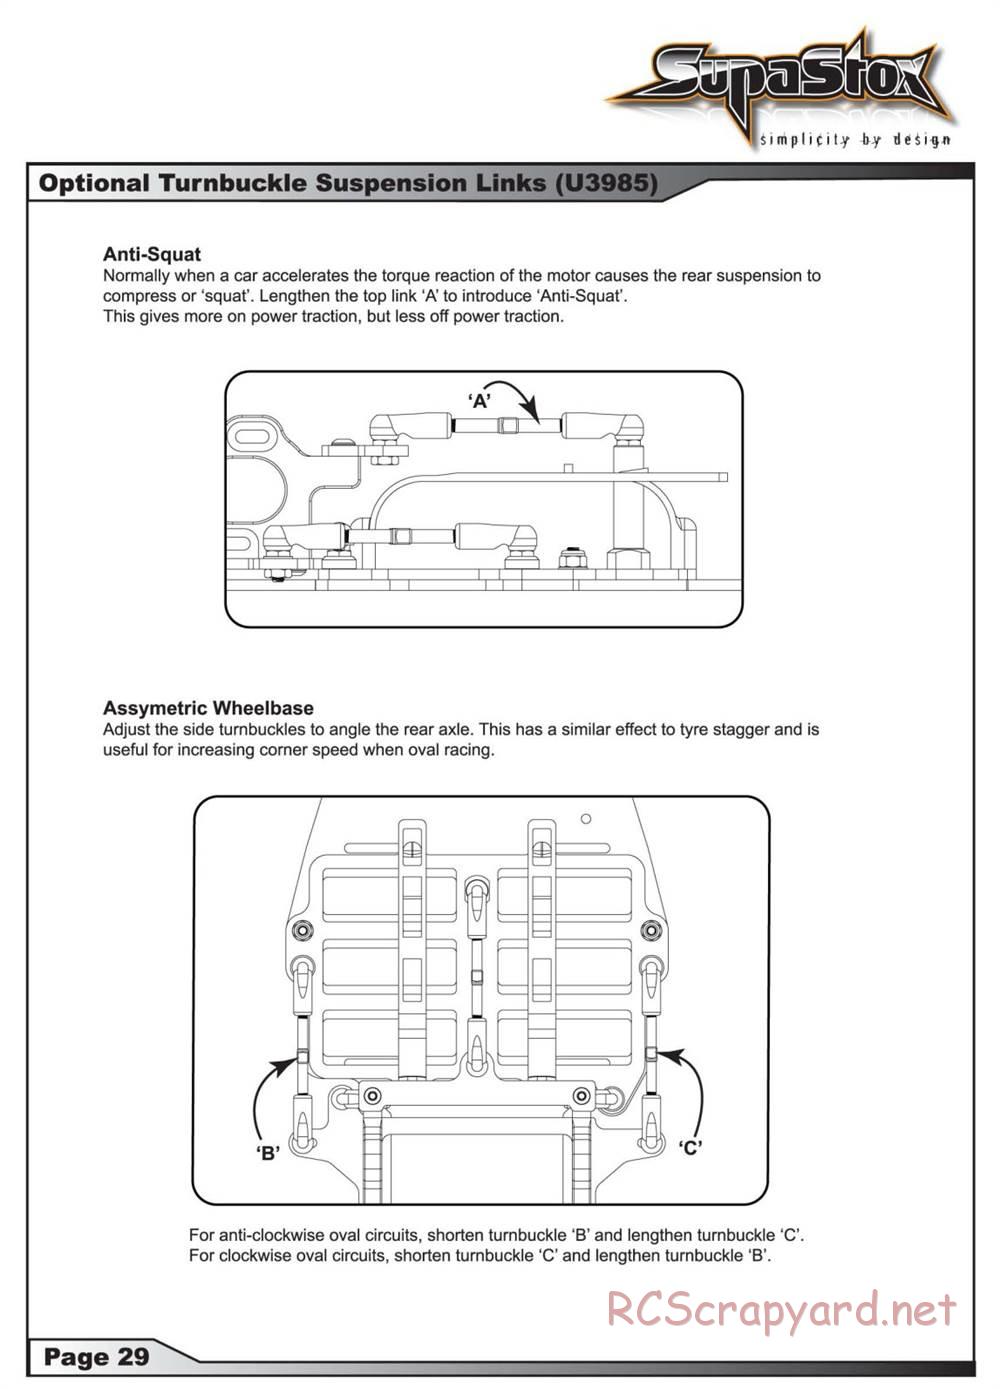 Schumacher - SupaStox - Manual - Page 32